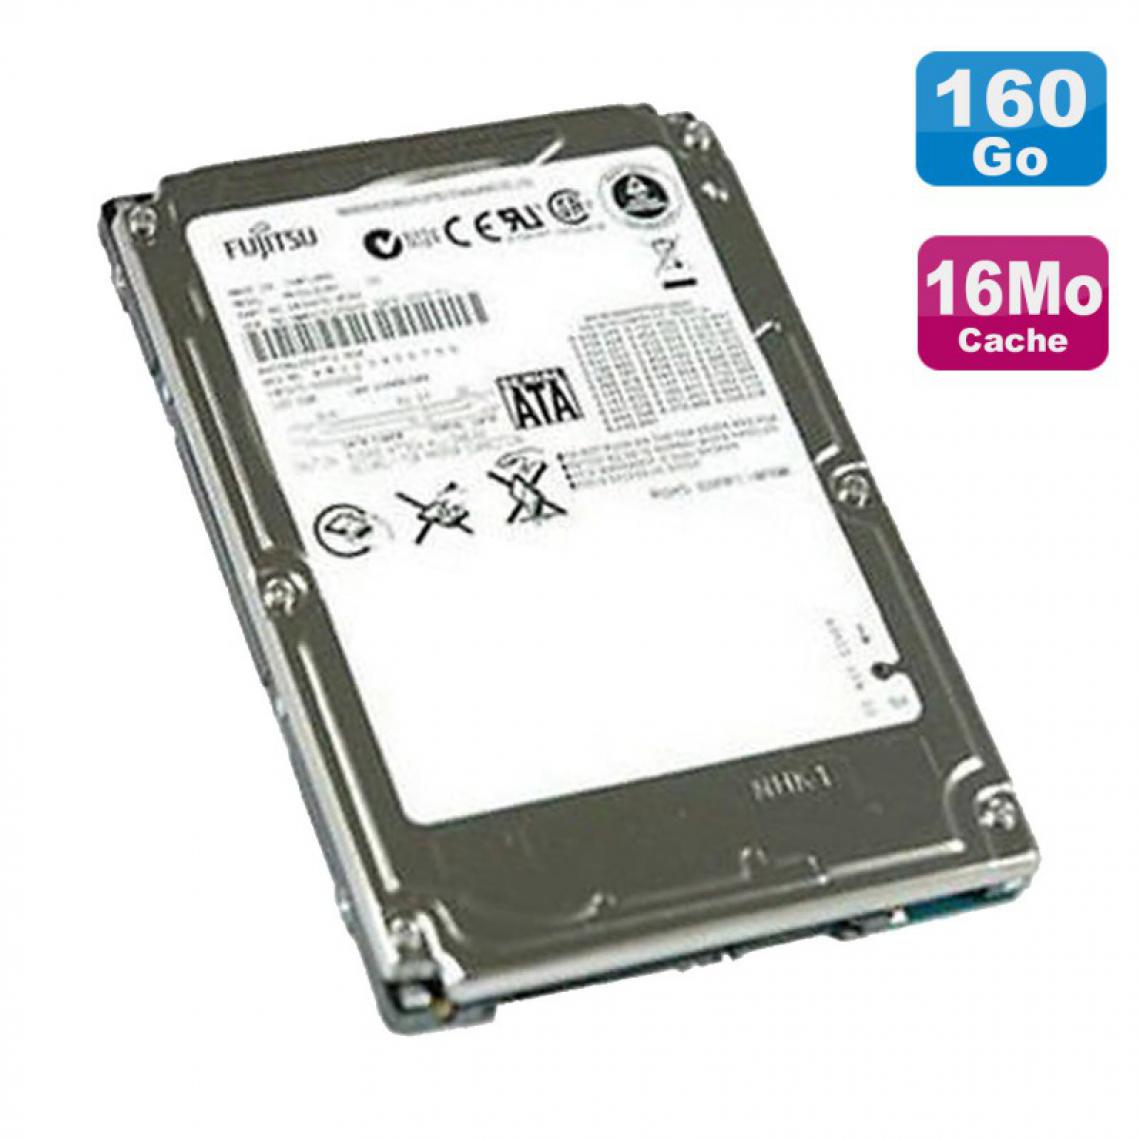 Fujitsu - Disque Dur 160Go SATA 2.5" Fujitsu MHZ2160BJ CA07096-B32400DL 7200RPM 16Mo - Disque Dur interne